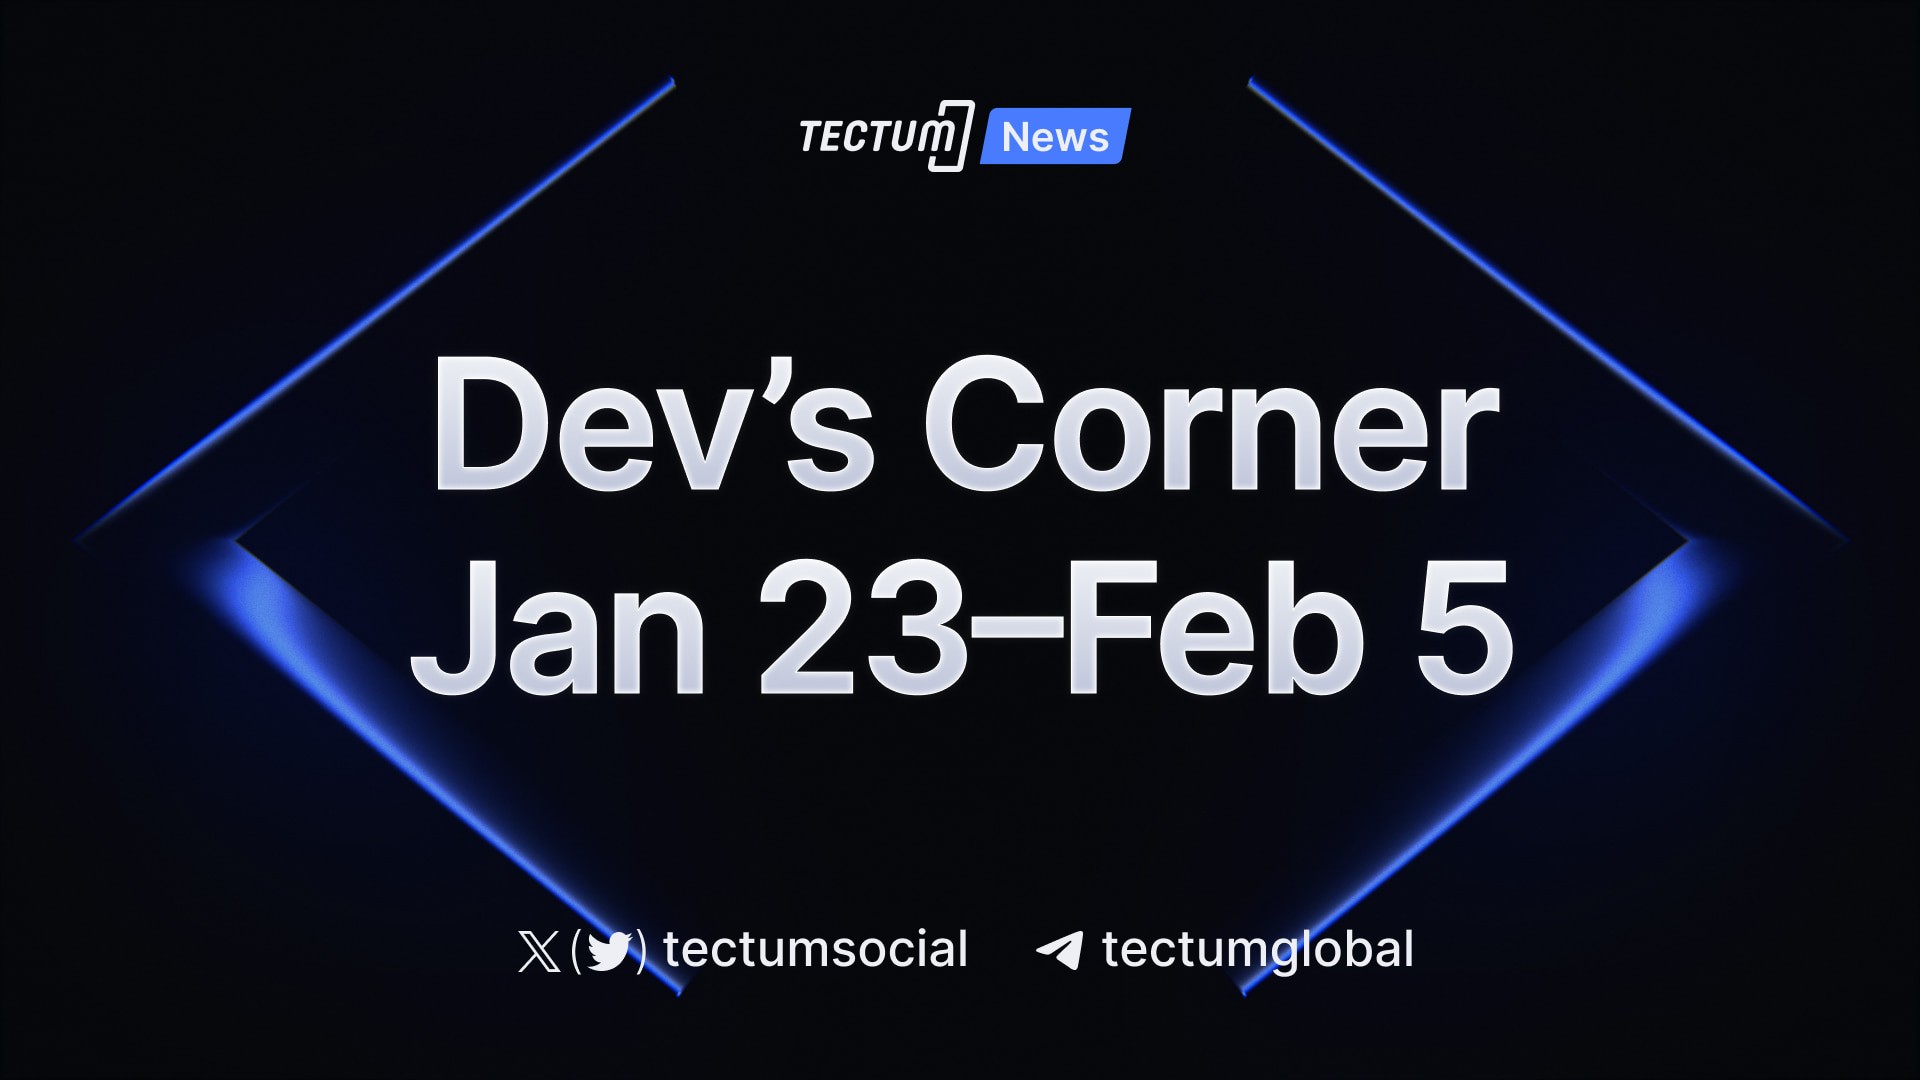 Tectum Developers Corner February 5th Update